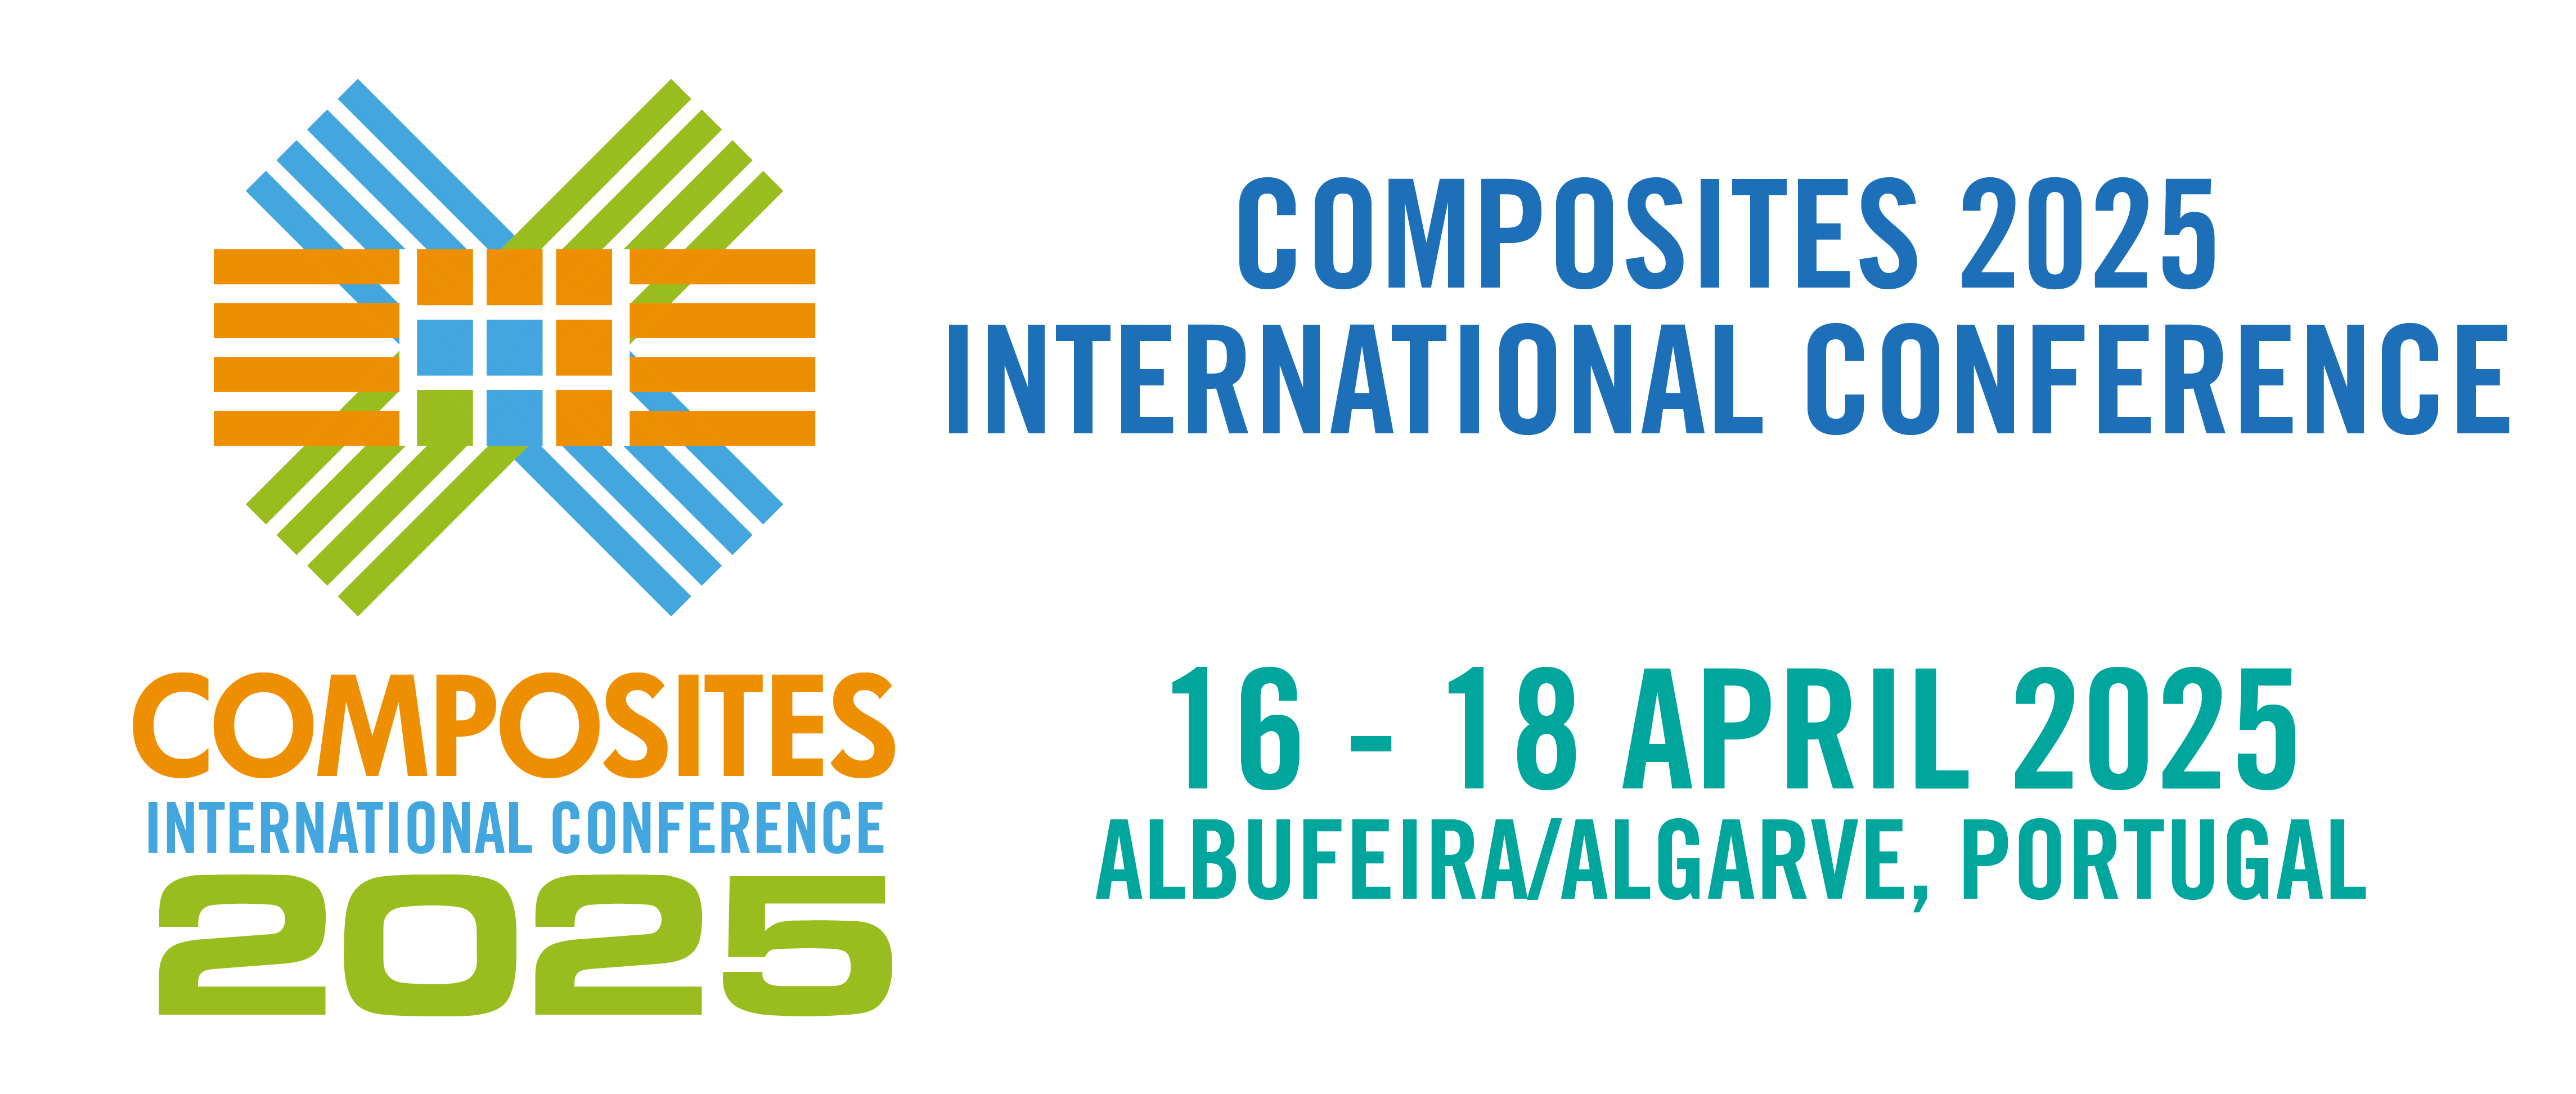 Composites International Conference - Composites 2025